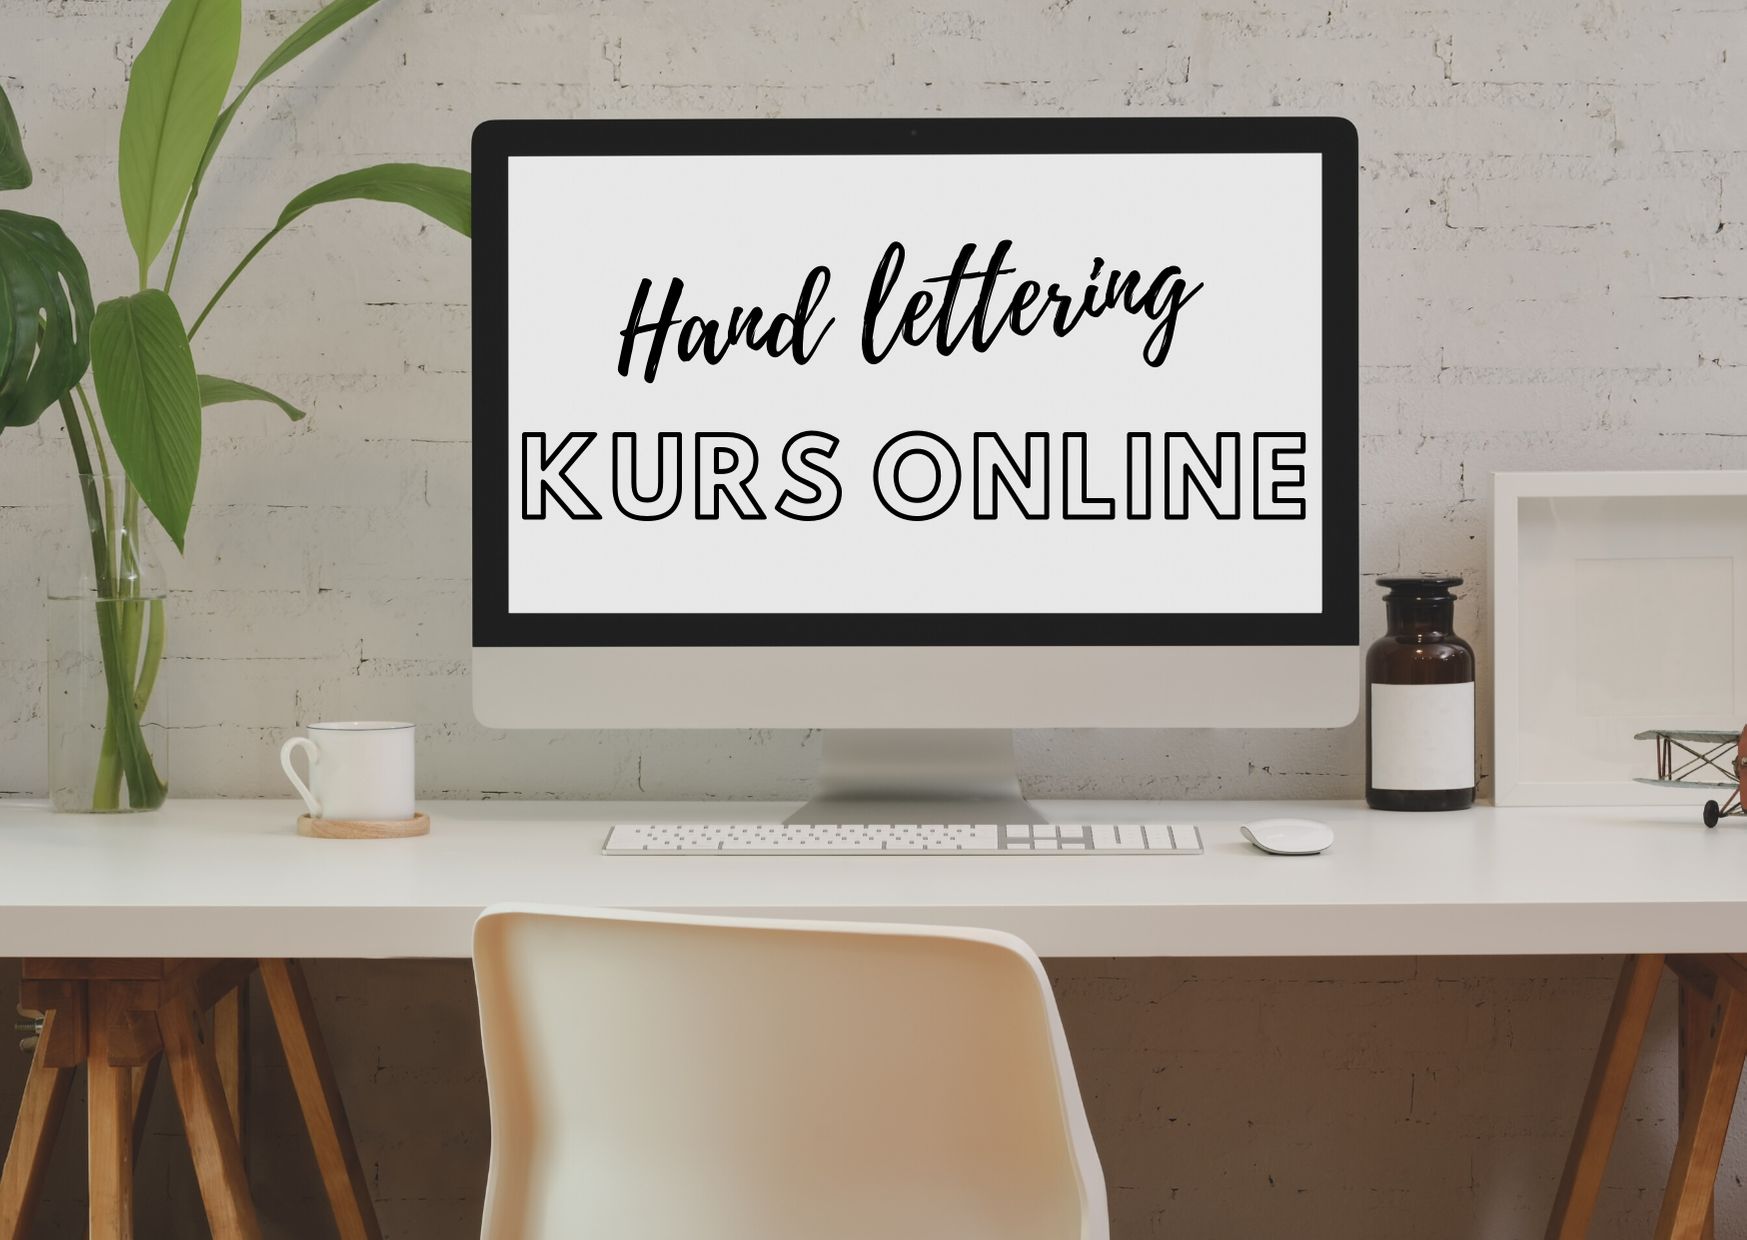 hand lettering kurs online - Hand lettering kurs online